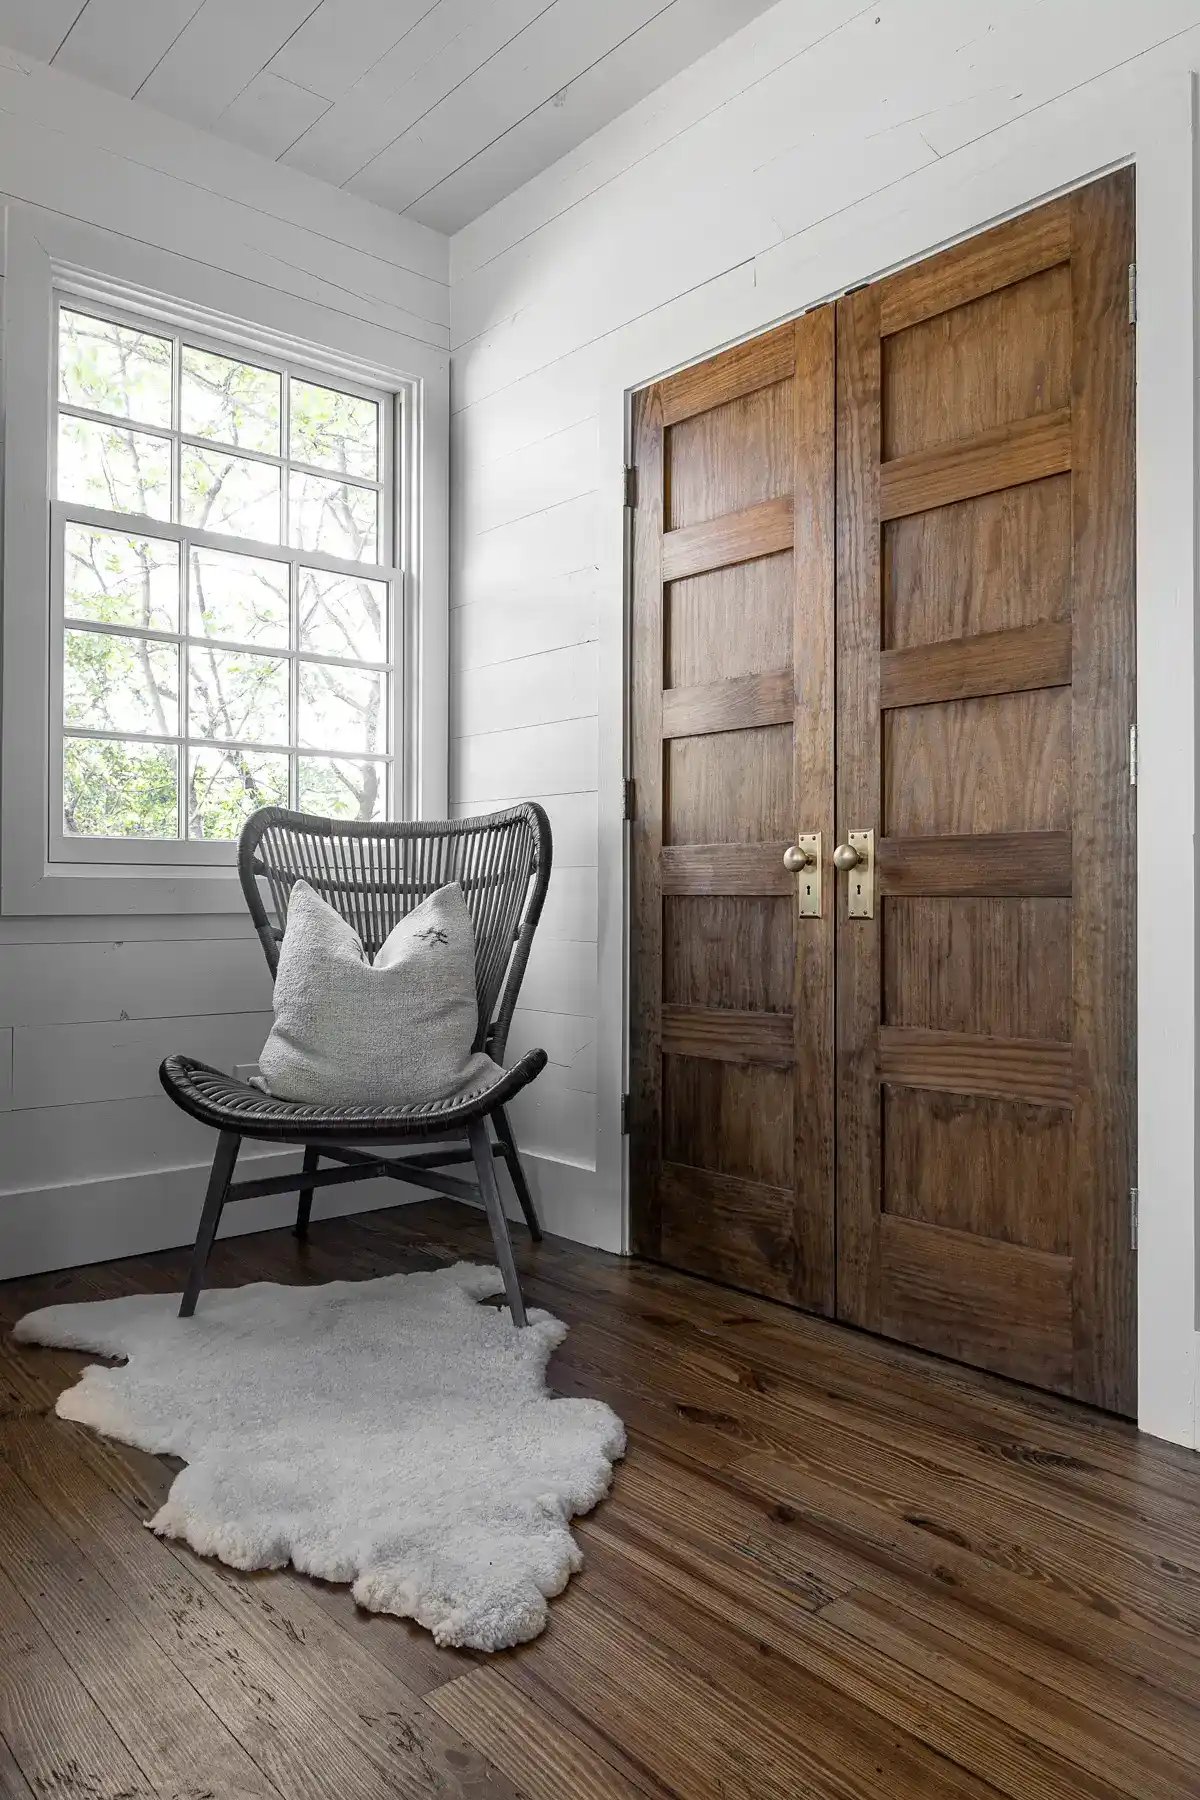 Cozy corner with a rustic wooden door, wicker chair, sheepskin rug, and shiplap walls.